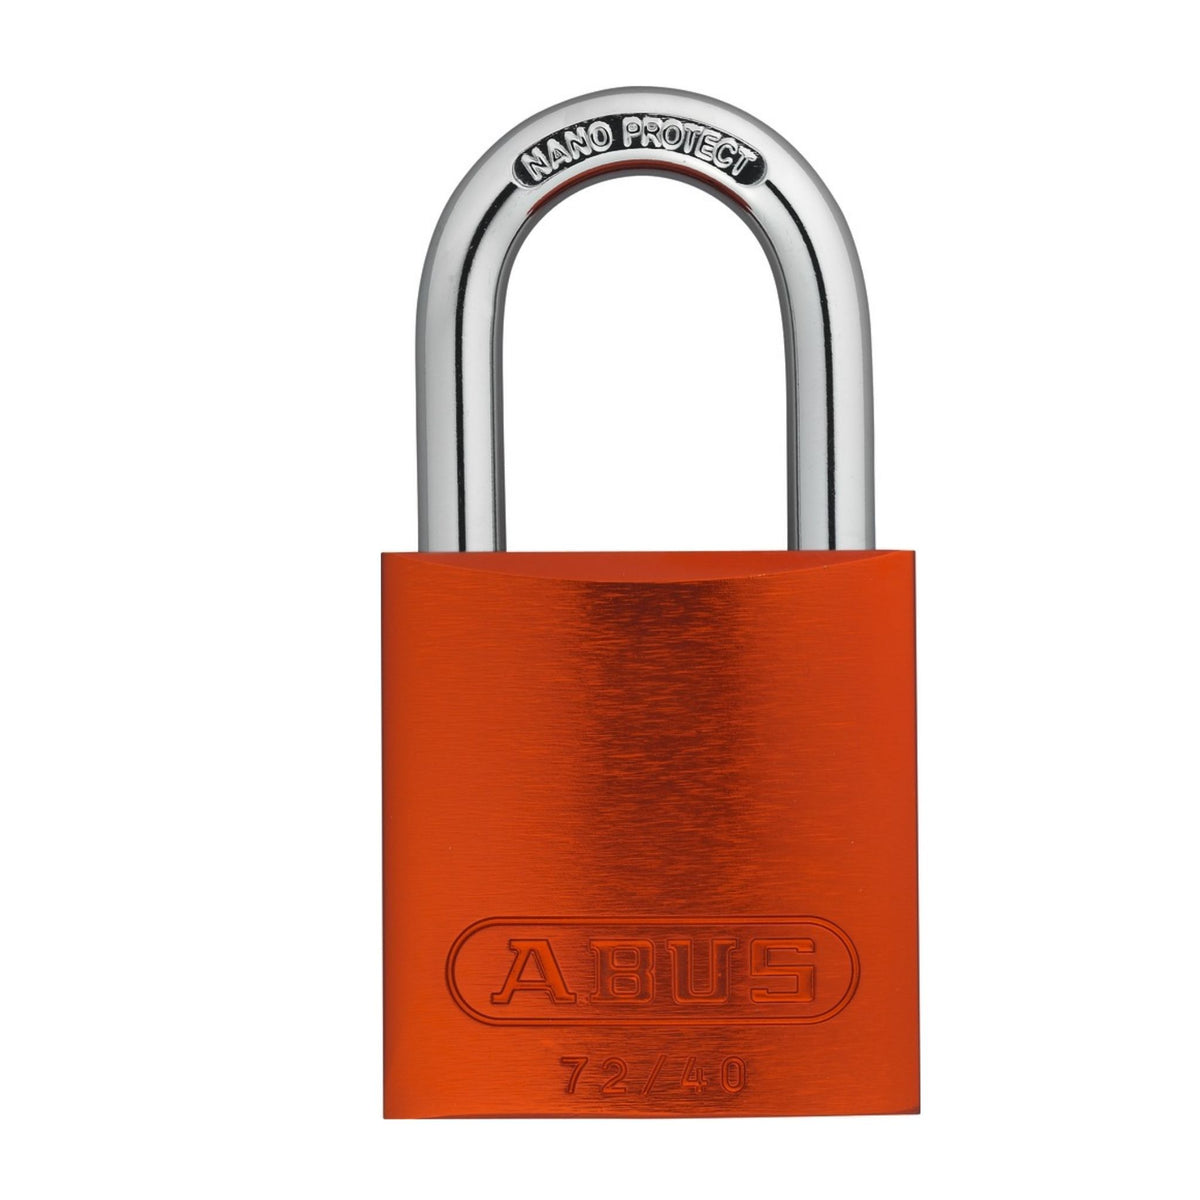 Abus 72/40 MK Orange Titalium Safety Padlock with 1-Inch Shackle - The Lock Source 